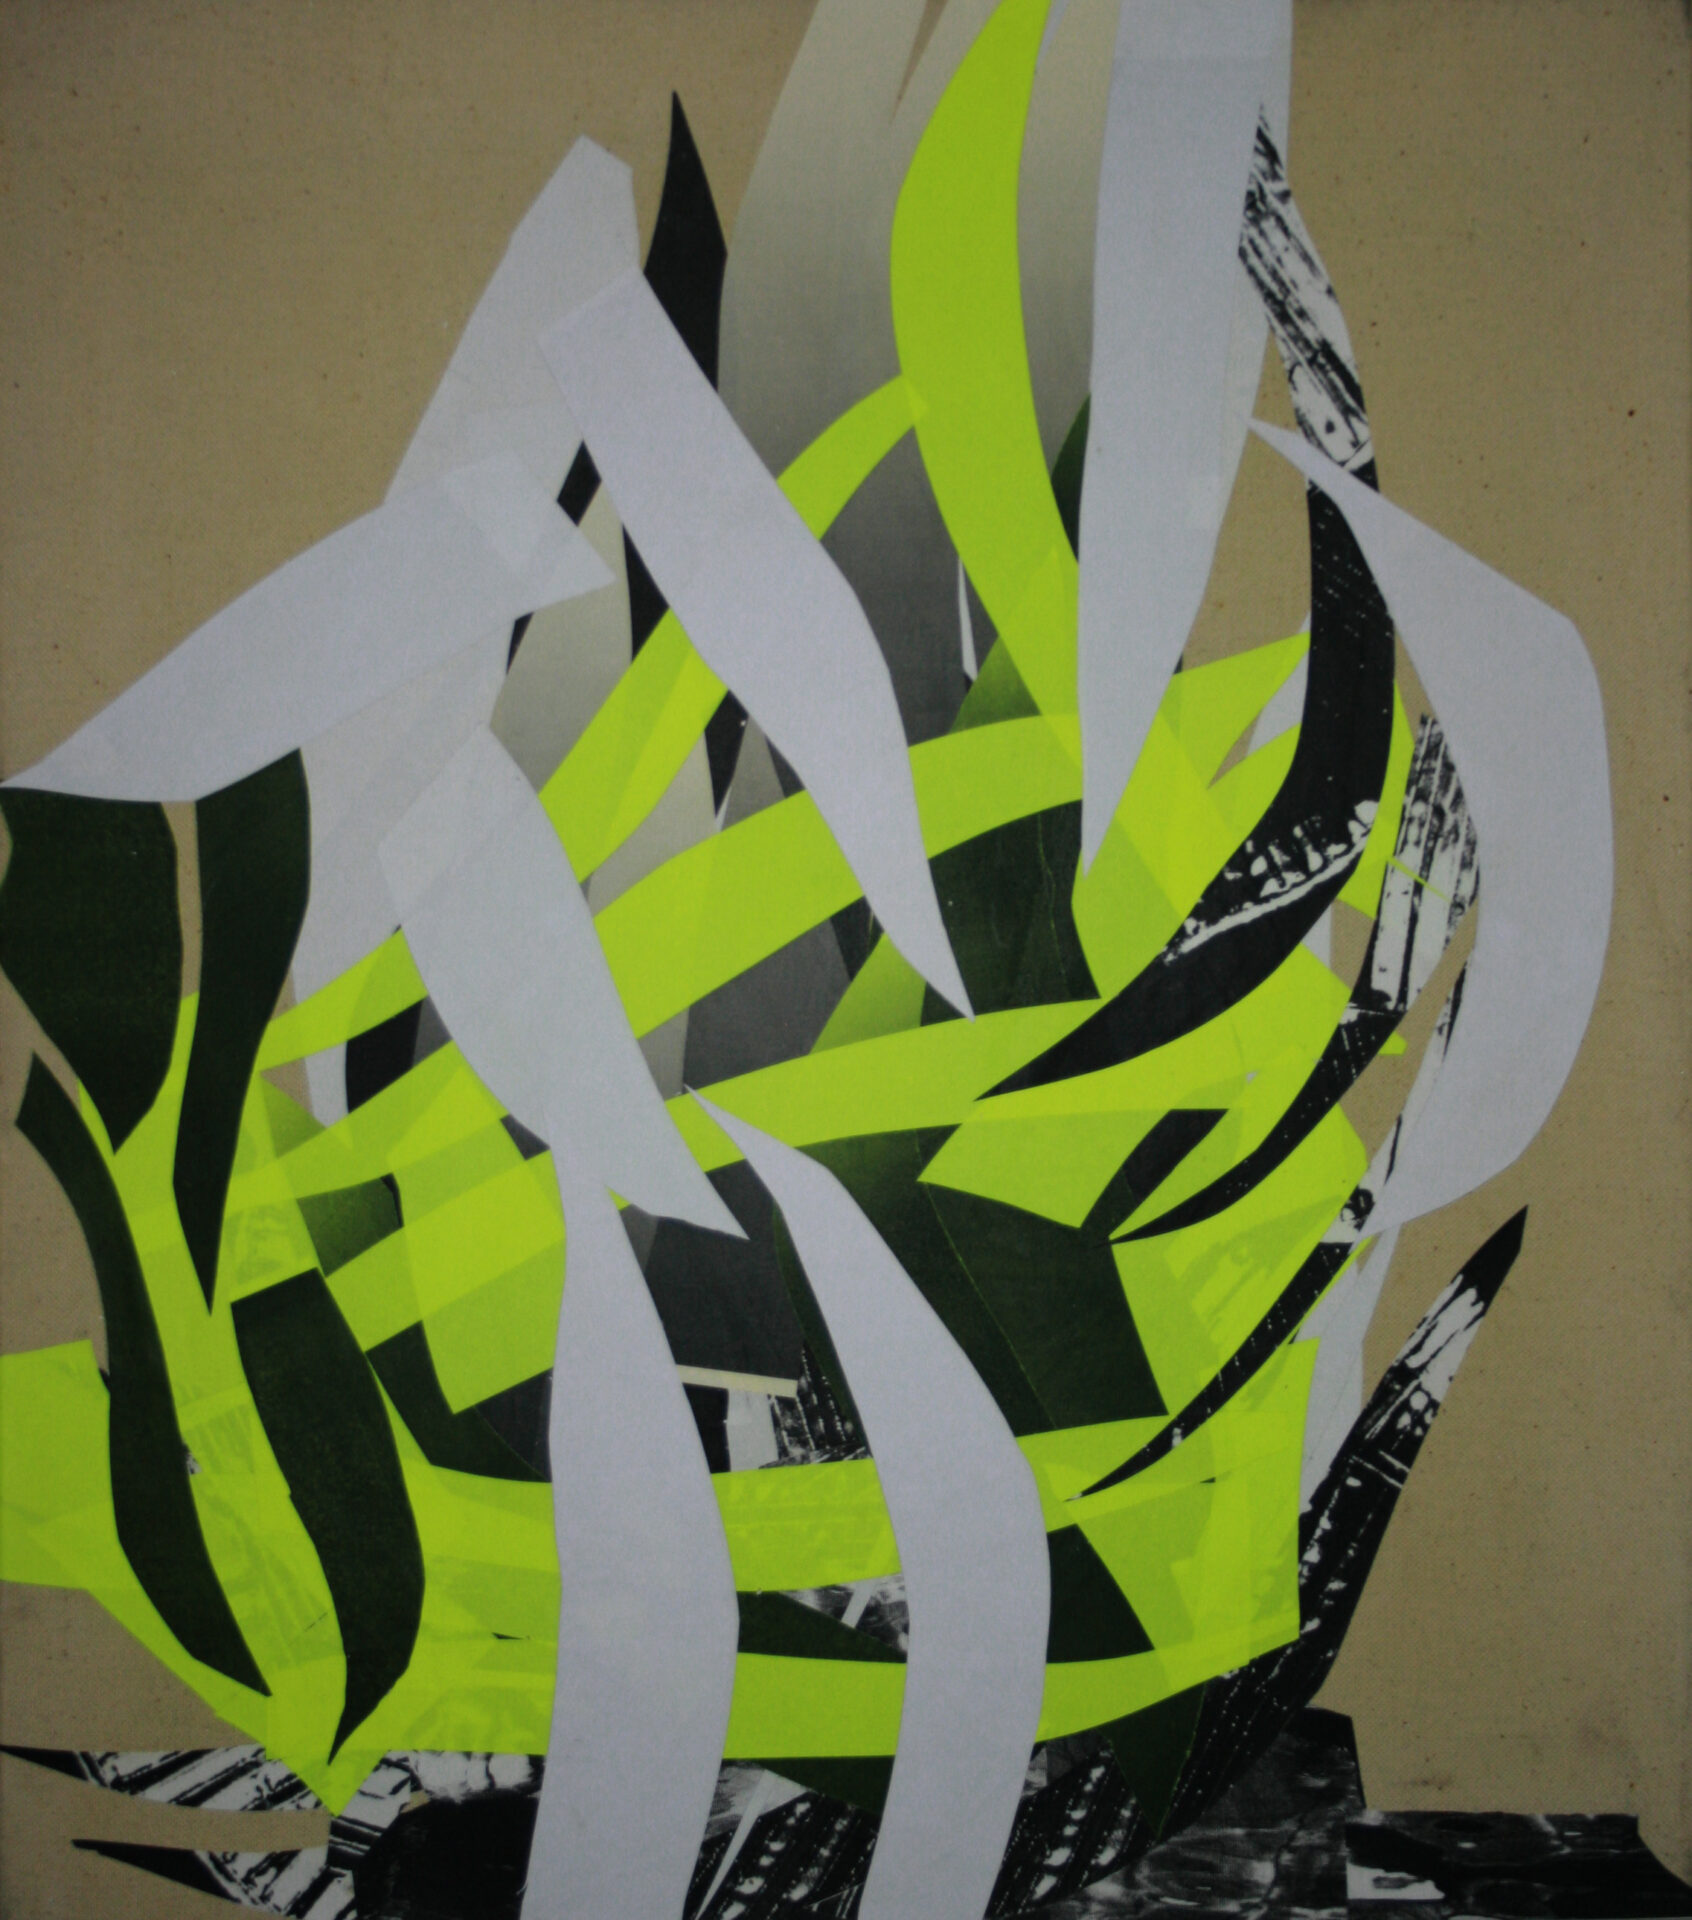 Daniel Beer, INFINITE ACTION on paper, 19-13, 50 x 55 cm, Papier auf Leinwand, 2019